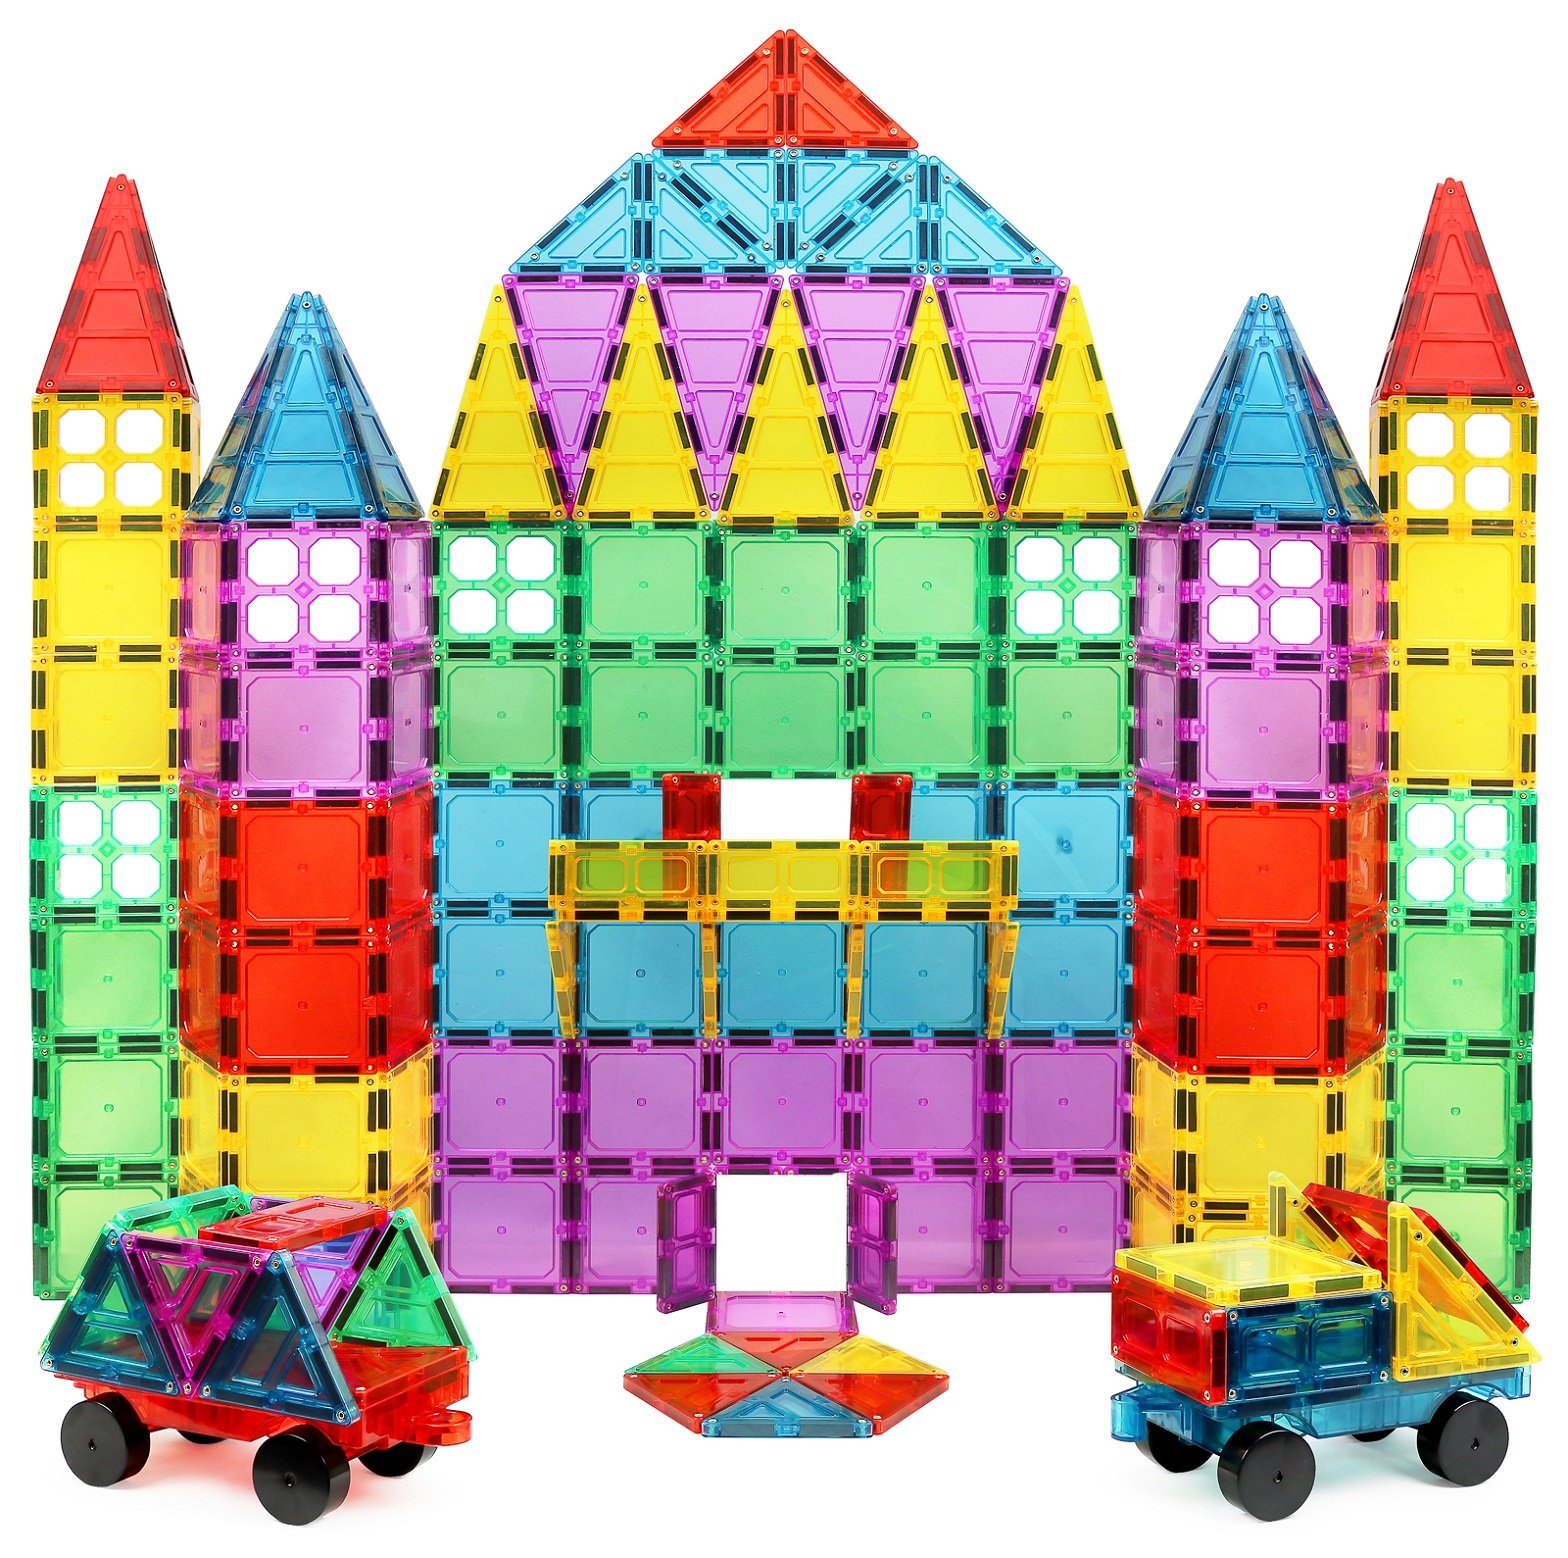 Magnet Build 100-Piece Extra Strong Magnetic Tiles Set - Magnets for Kids, 3D Tile Assorted Shapes & colors, STEM Learning Toys 